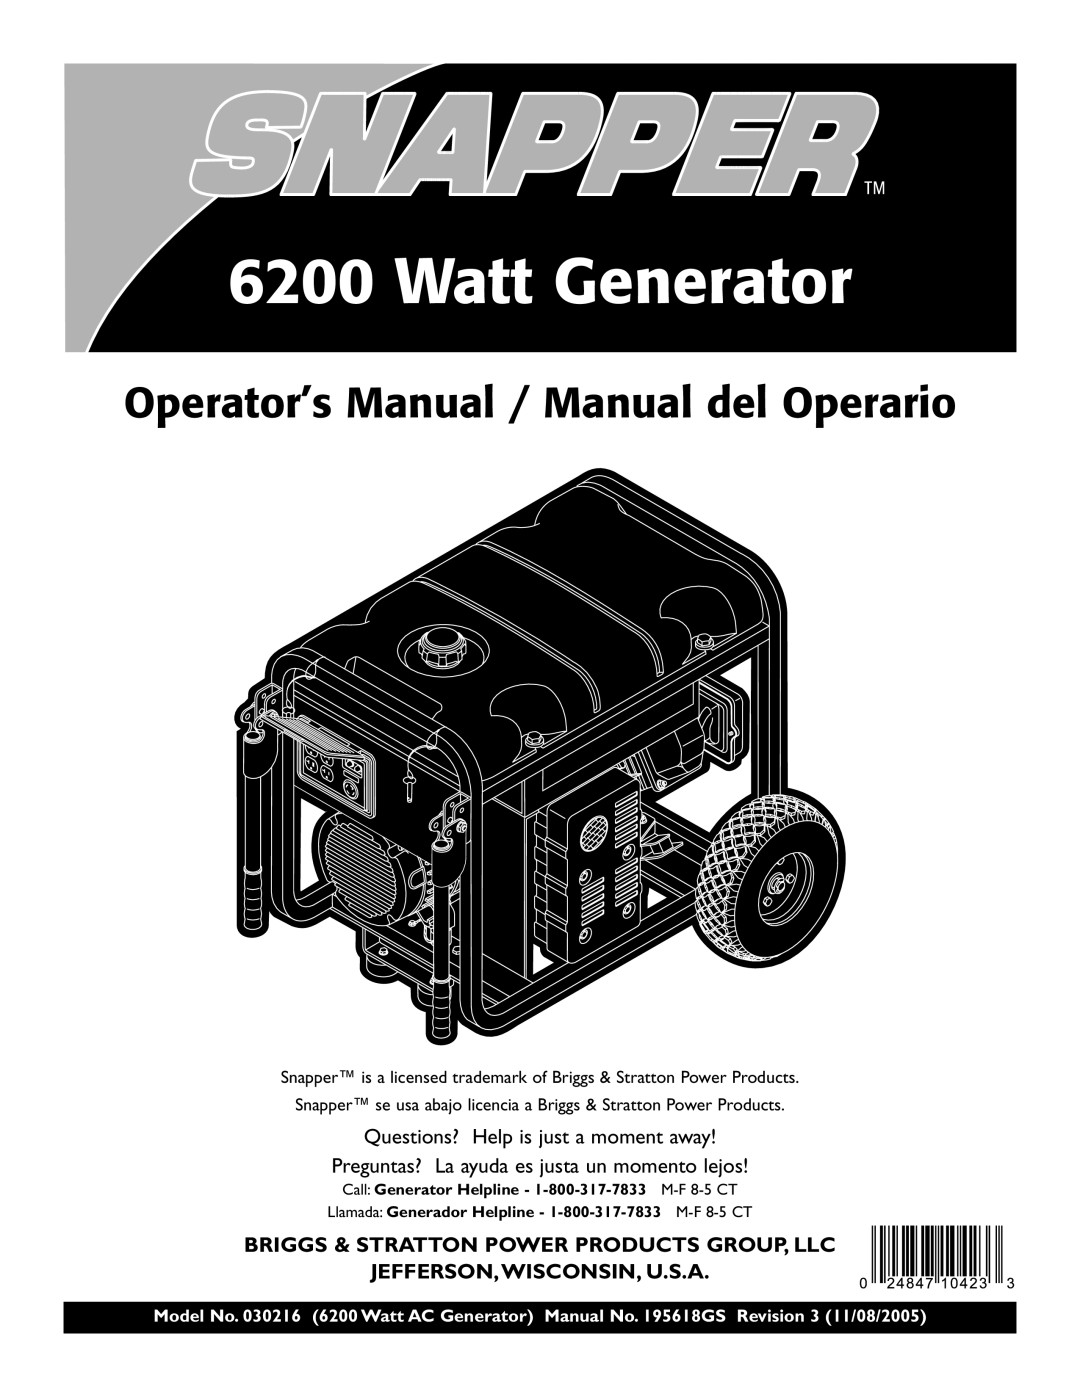 Snapper 30216 manual Questions? Help is just a moment away, Preguntas? La ayuda es justa un momento lejos, Watt Generator 